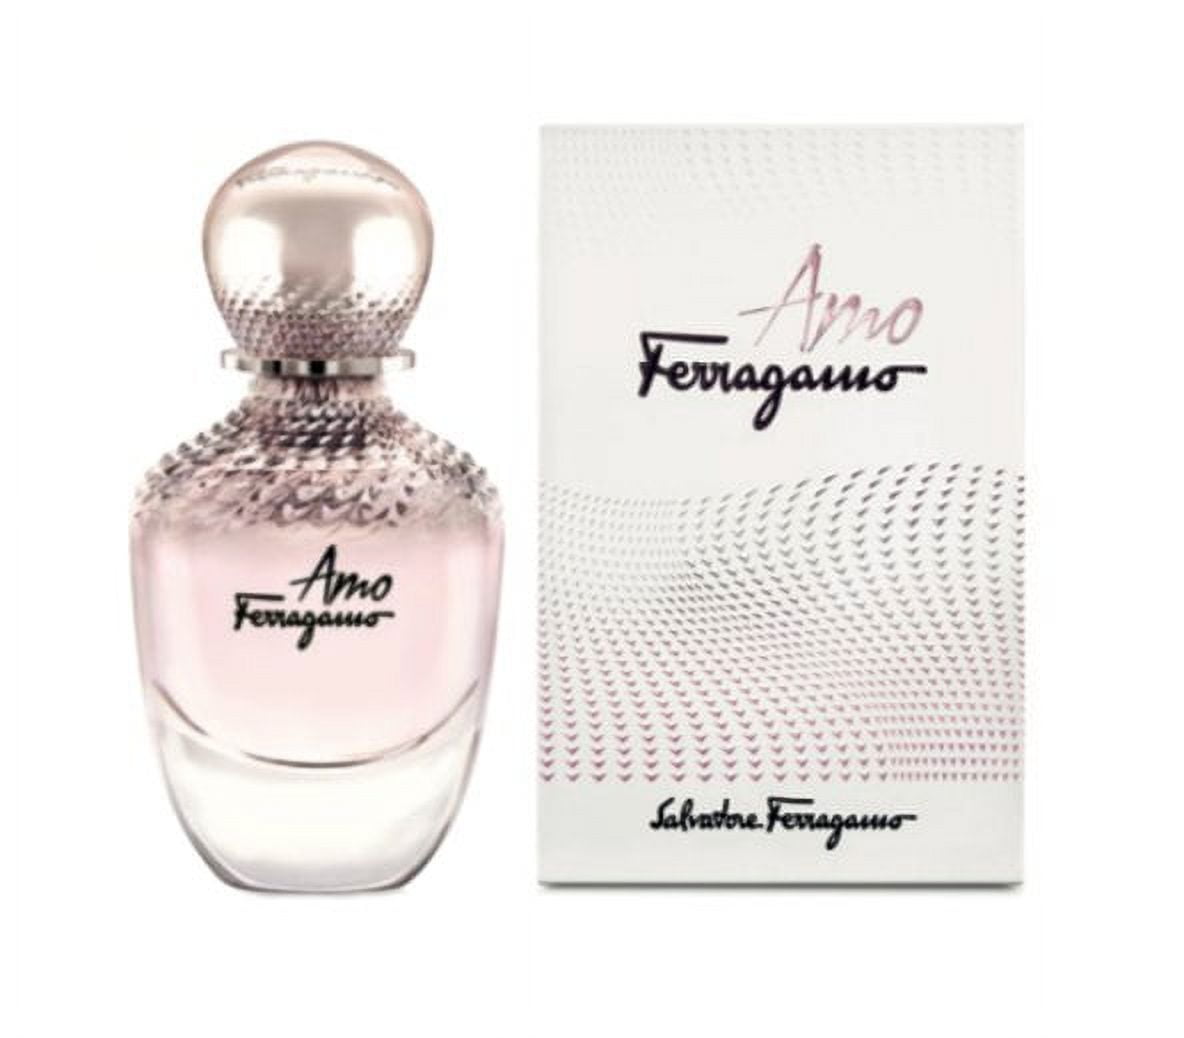 Salvatore Ferragamo Amo Ferragamo 1.0 oz EDP Spray womens perfume 30 ml NIB